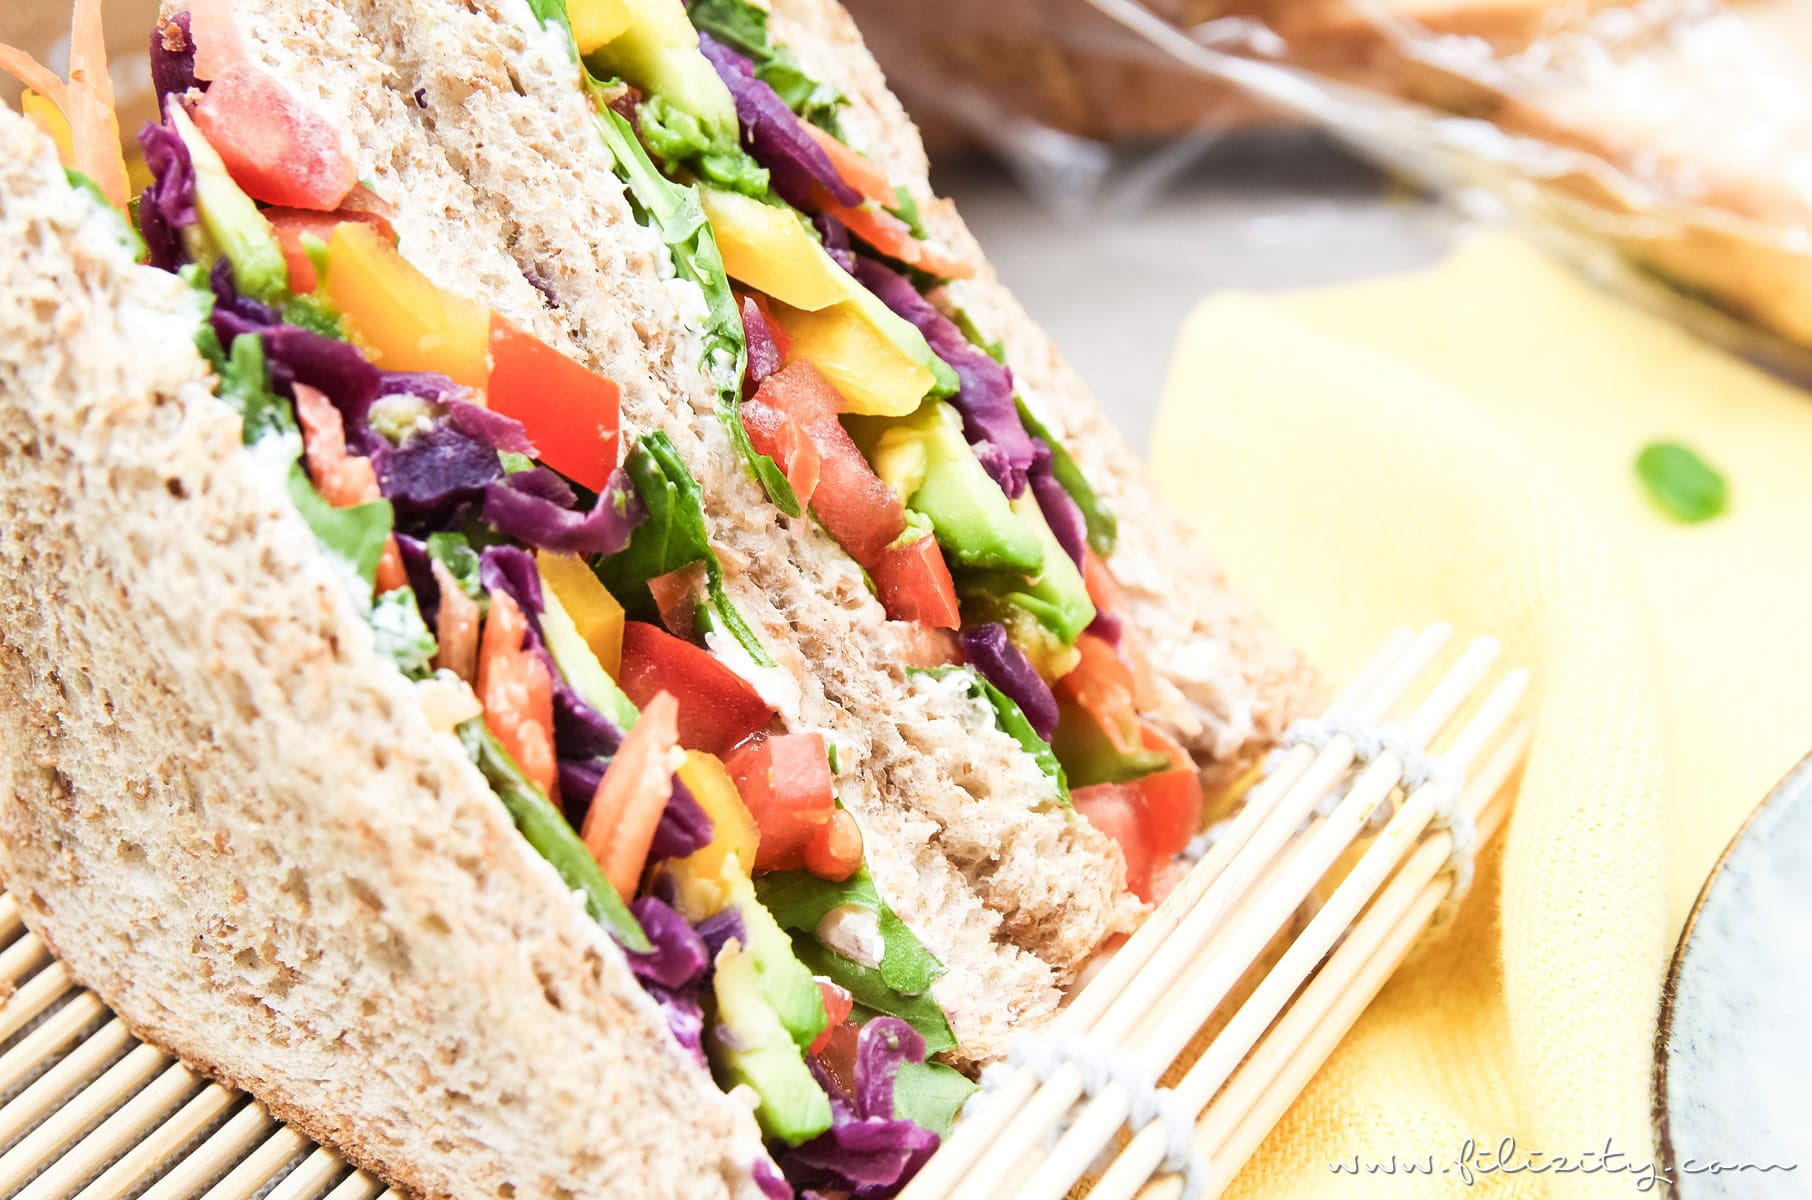 Rezept für Regenbogen-Sandwich - Vegetarischer Picknick Snack, Party-Food, Büro-Mahlzeit oder Pausenbrot | Filizity.com | Food-Blog aus dem Rheinland #sandwich #picknick